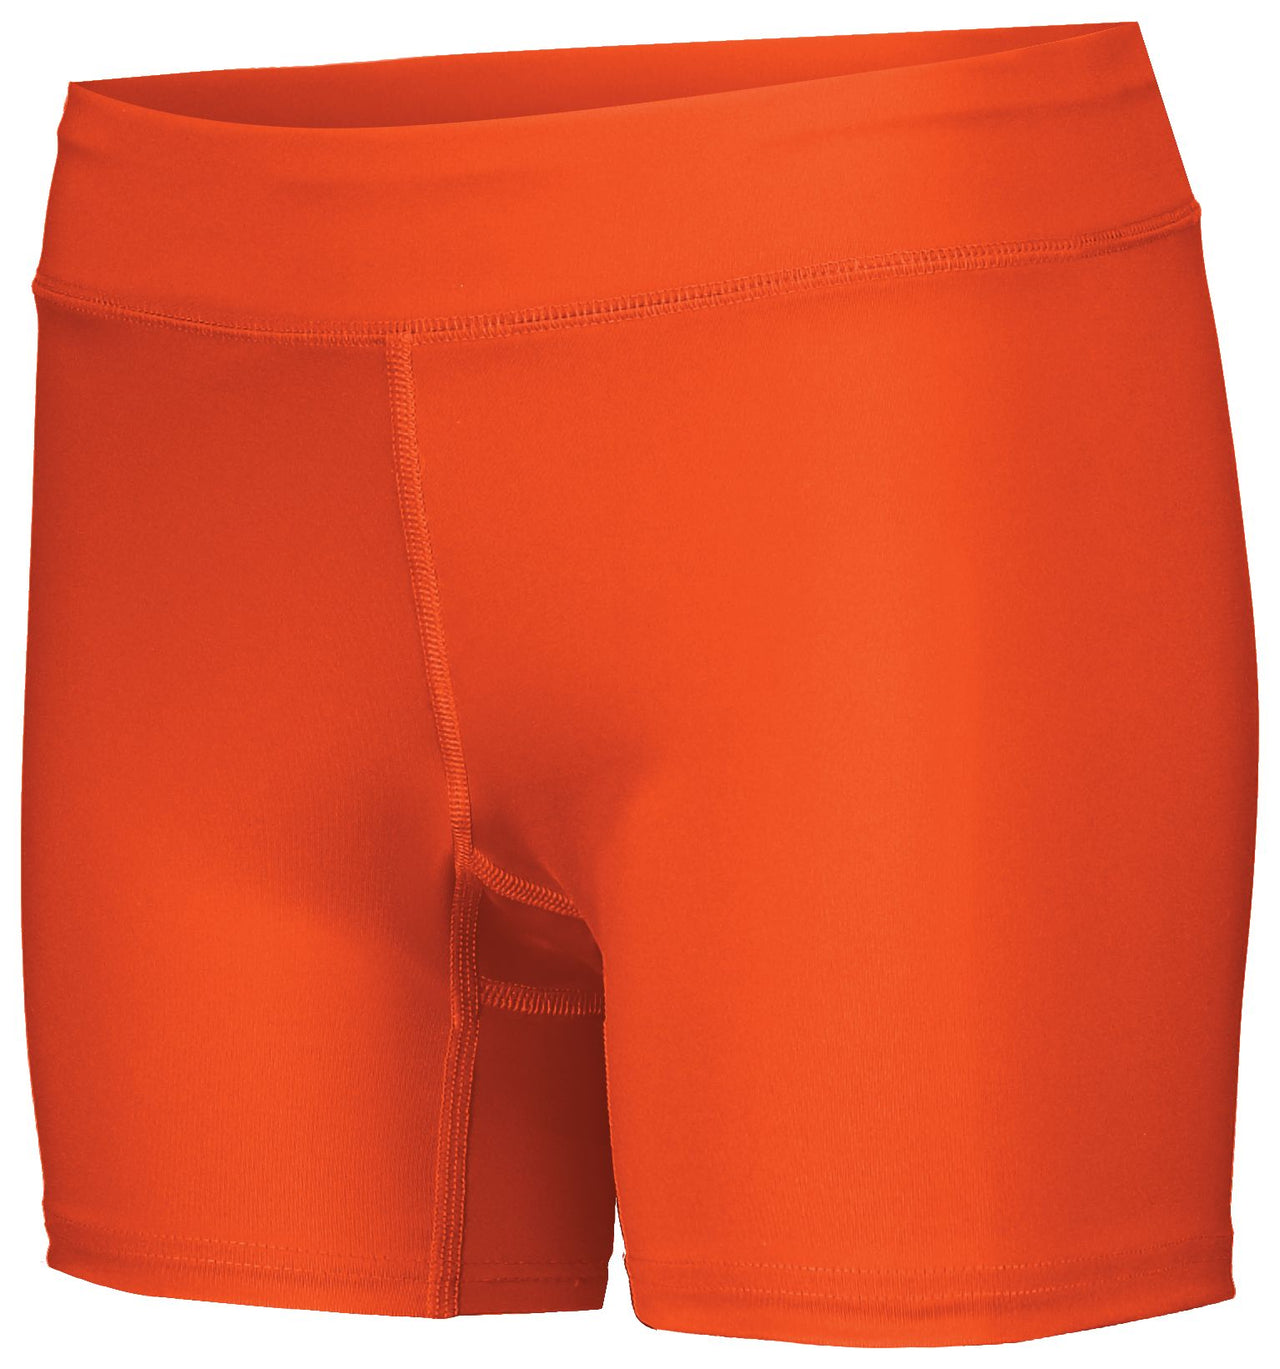 Ladies PR Max Compression Shorts - 221338